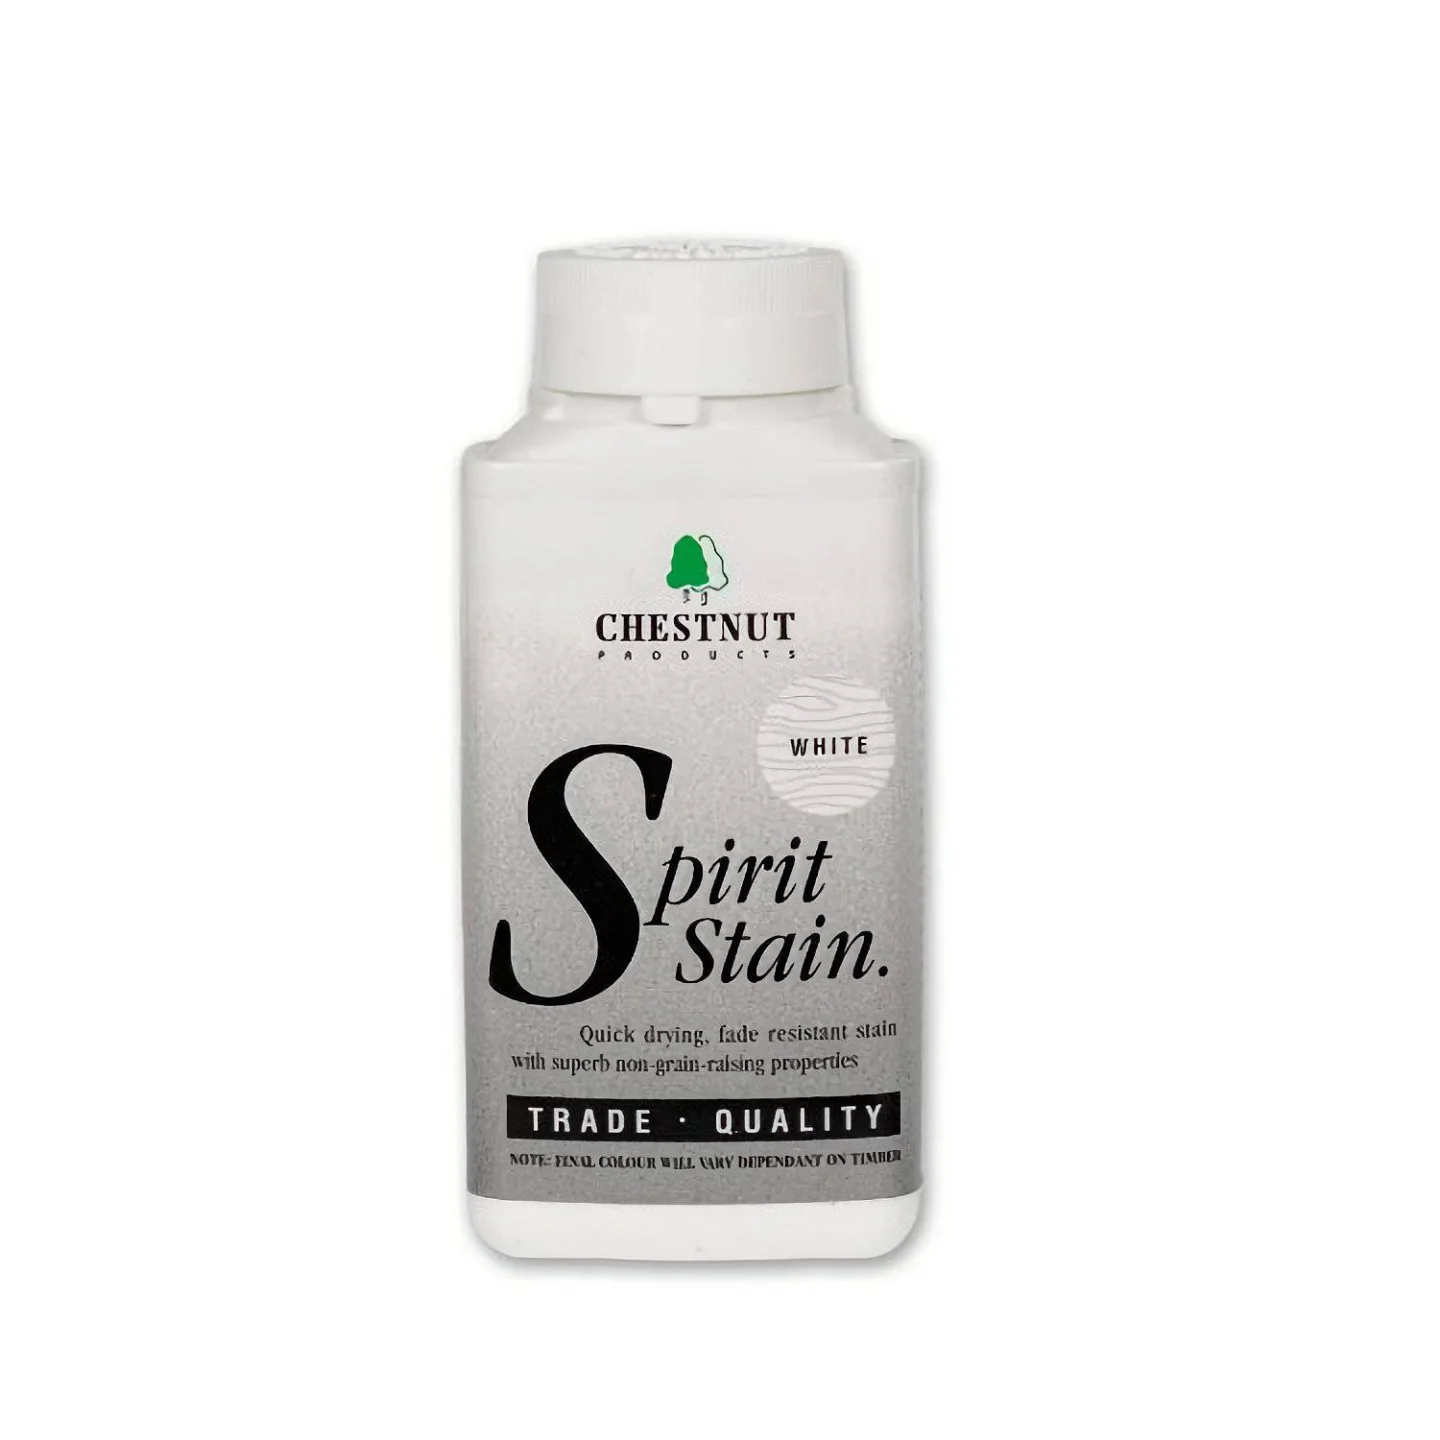 spirit stain white chestnut 250 ml.